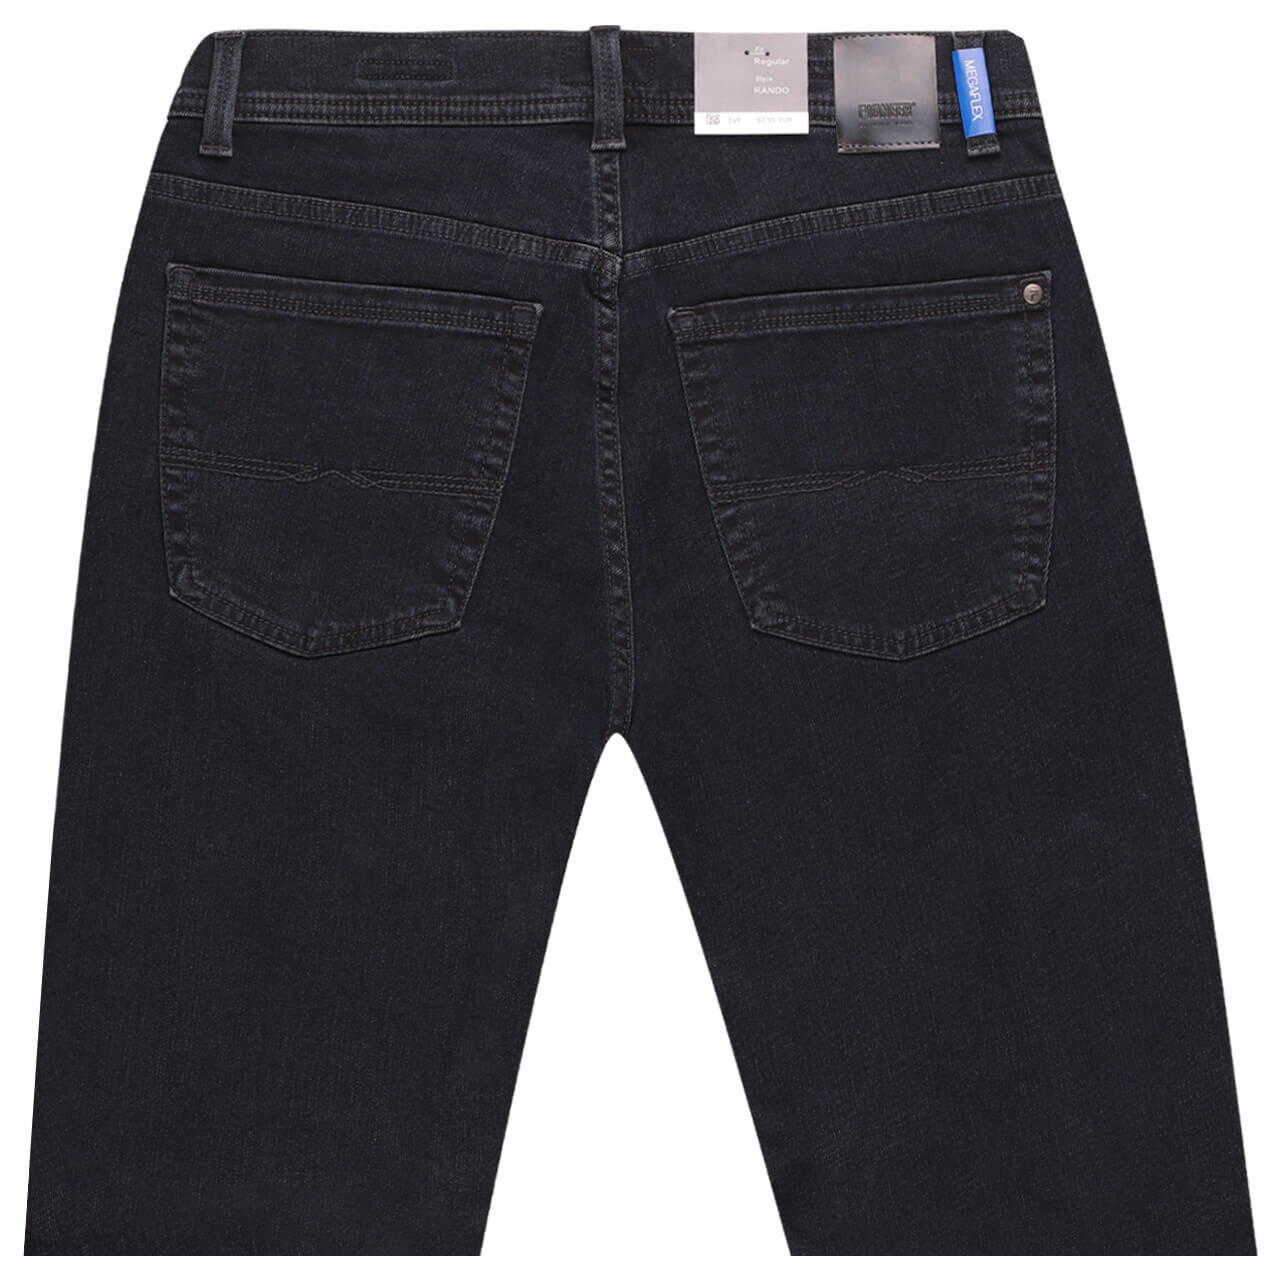 Pioneer Rando Jeans Megaflex blue black thermo denim